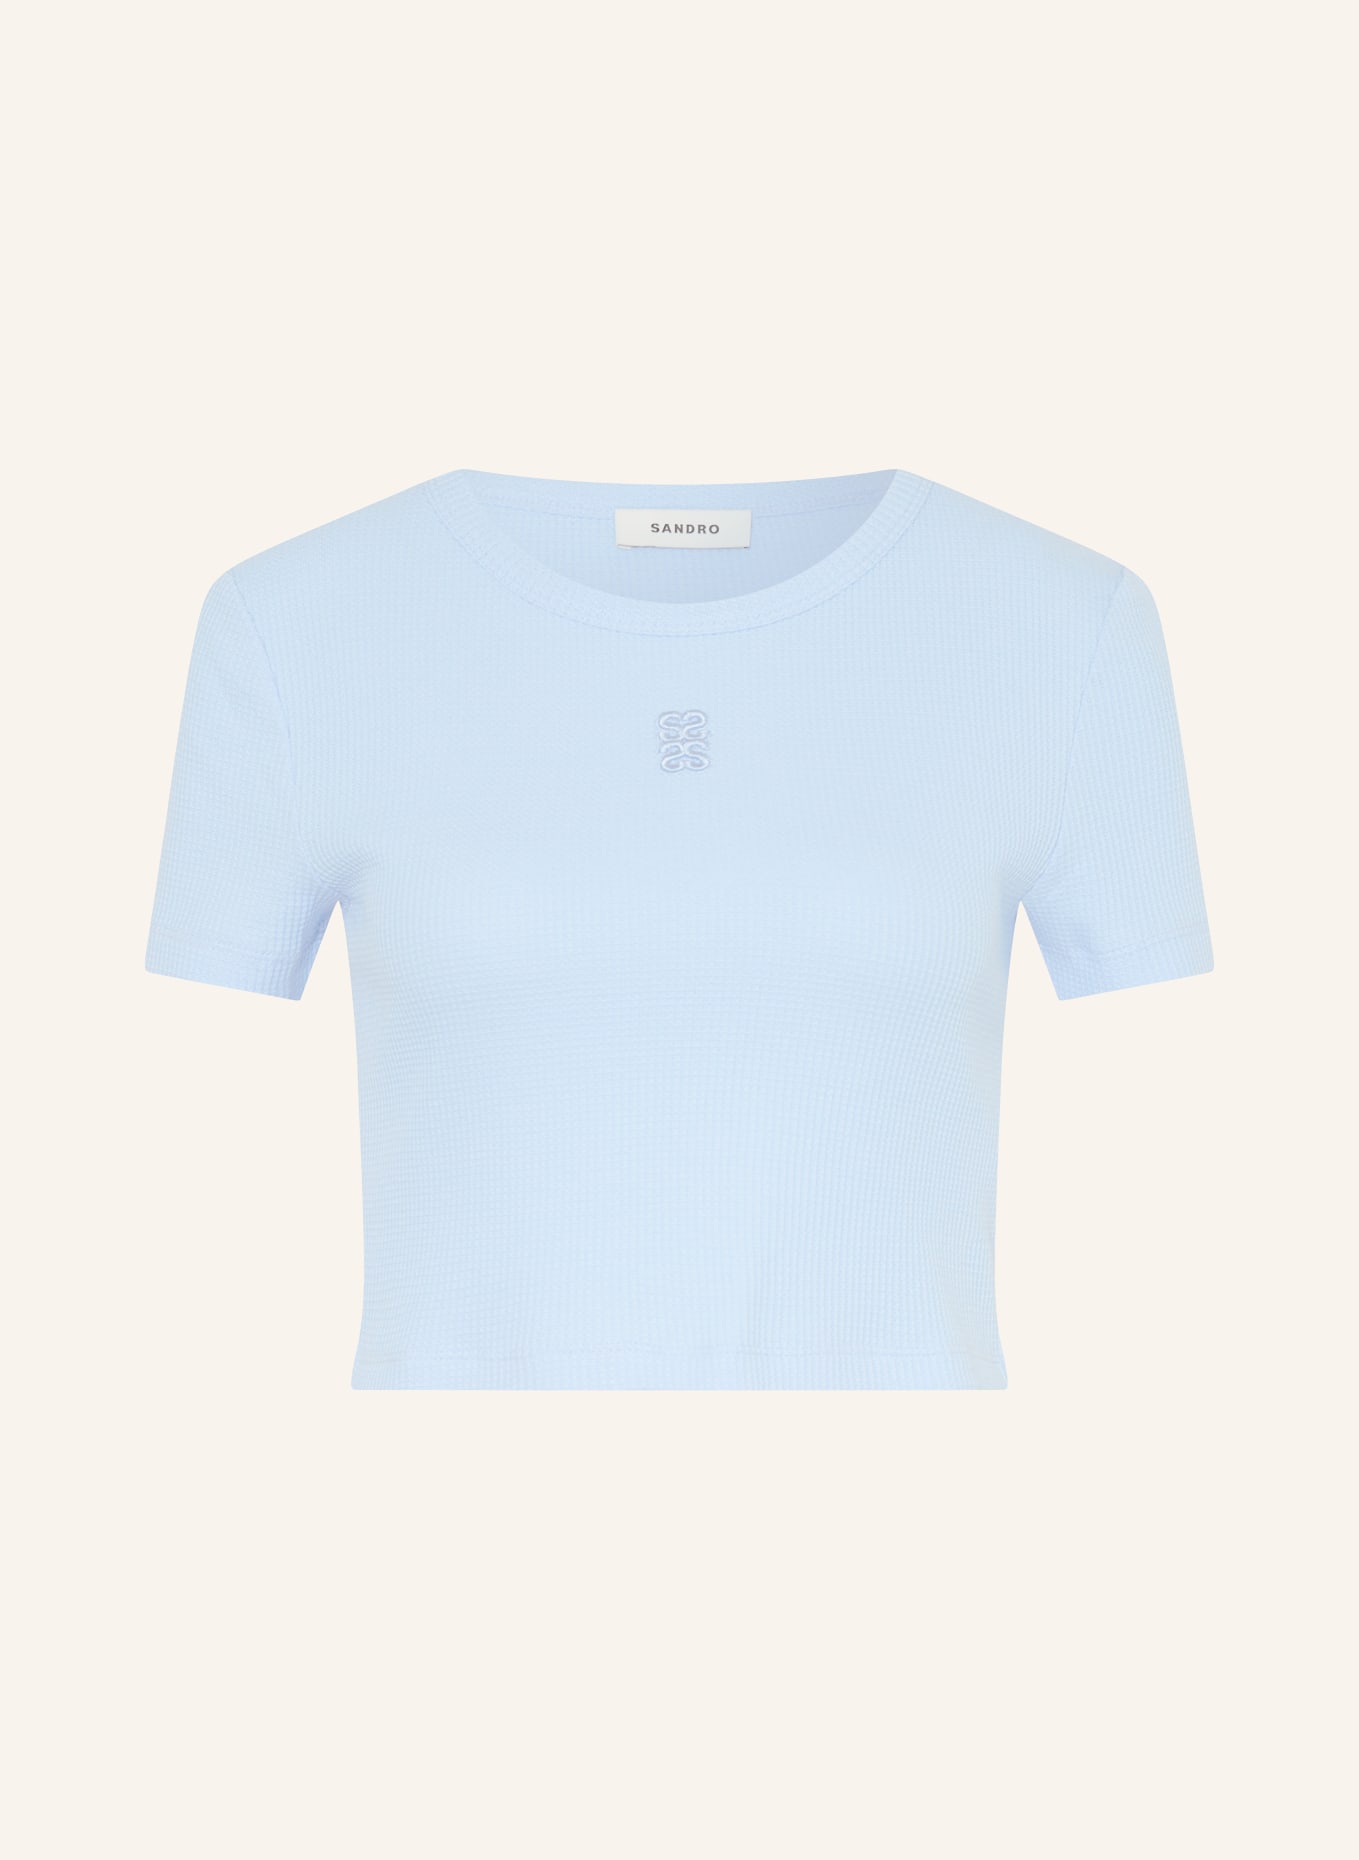 SANDRO Cropped-Shirt, Farbe: HELLBLAU (Bild 1)